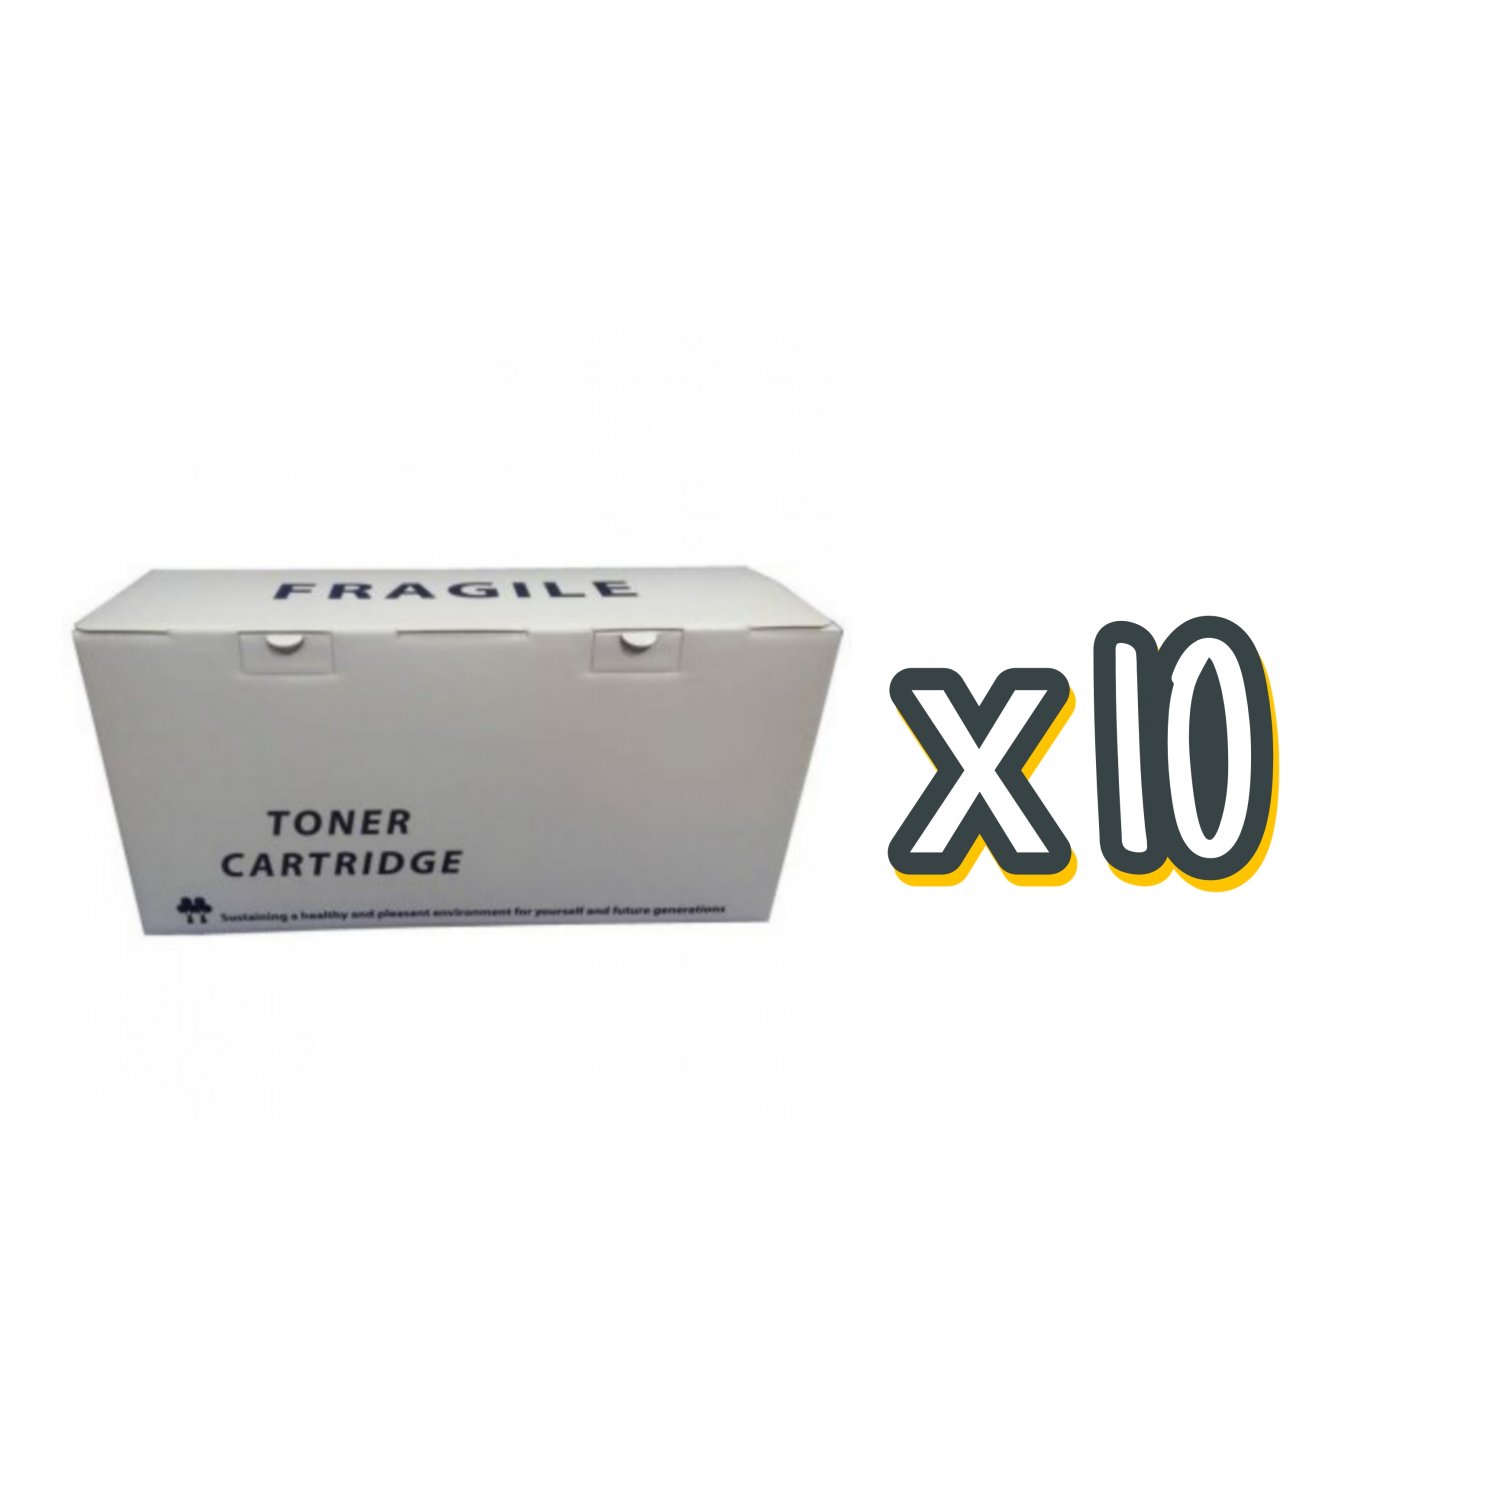 10PK TN210 Yellow Toner Cartridge For Brother DCP-9010CN HL-3045CN 3075CW